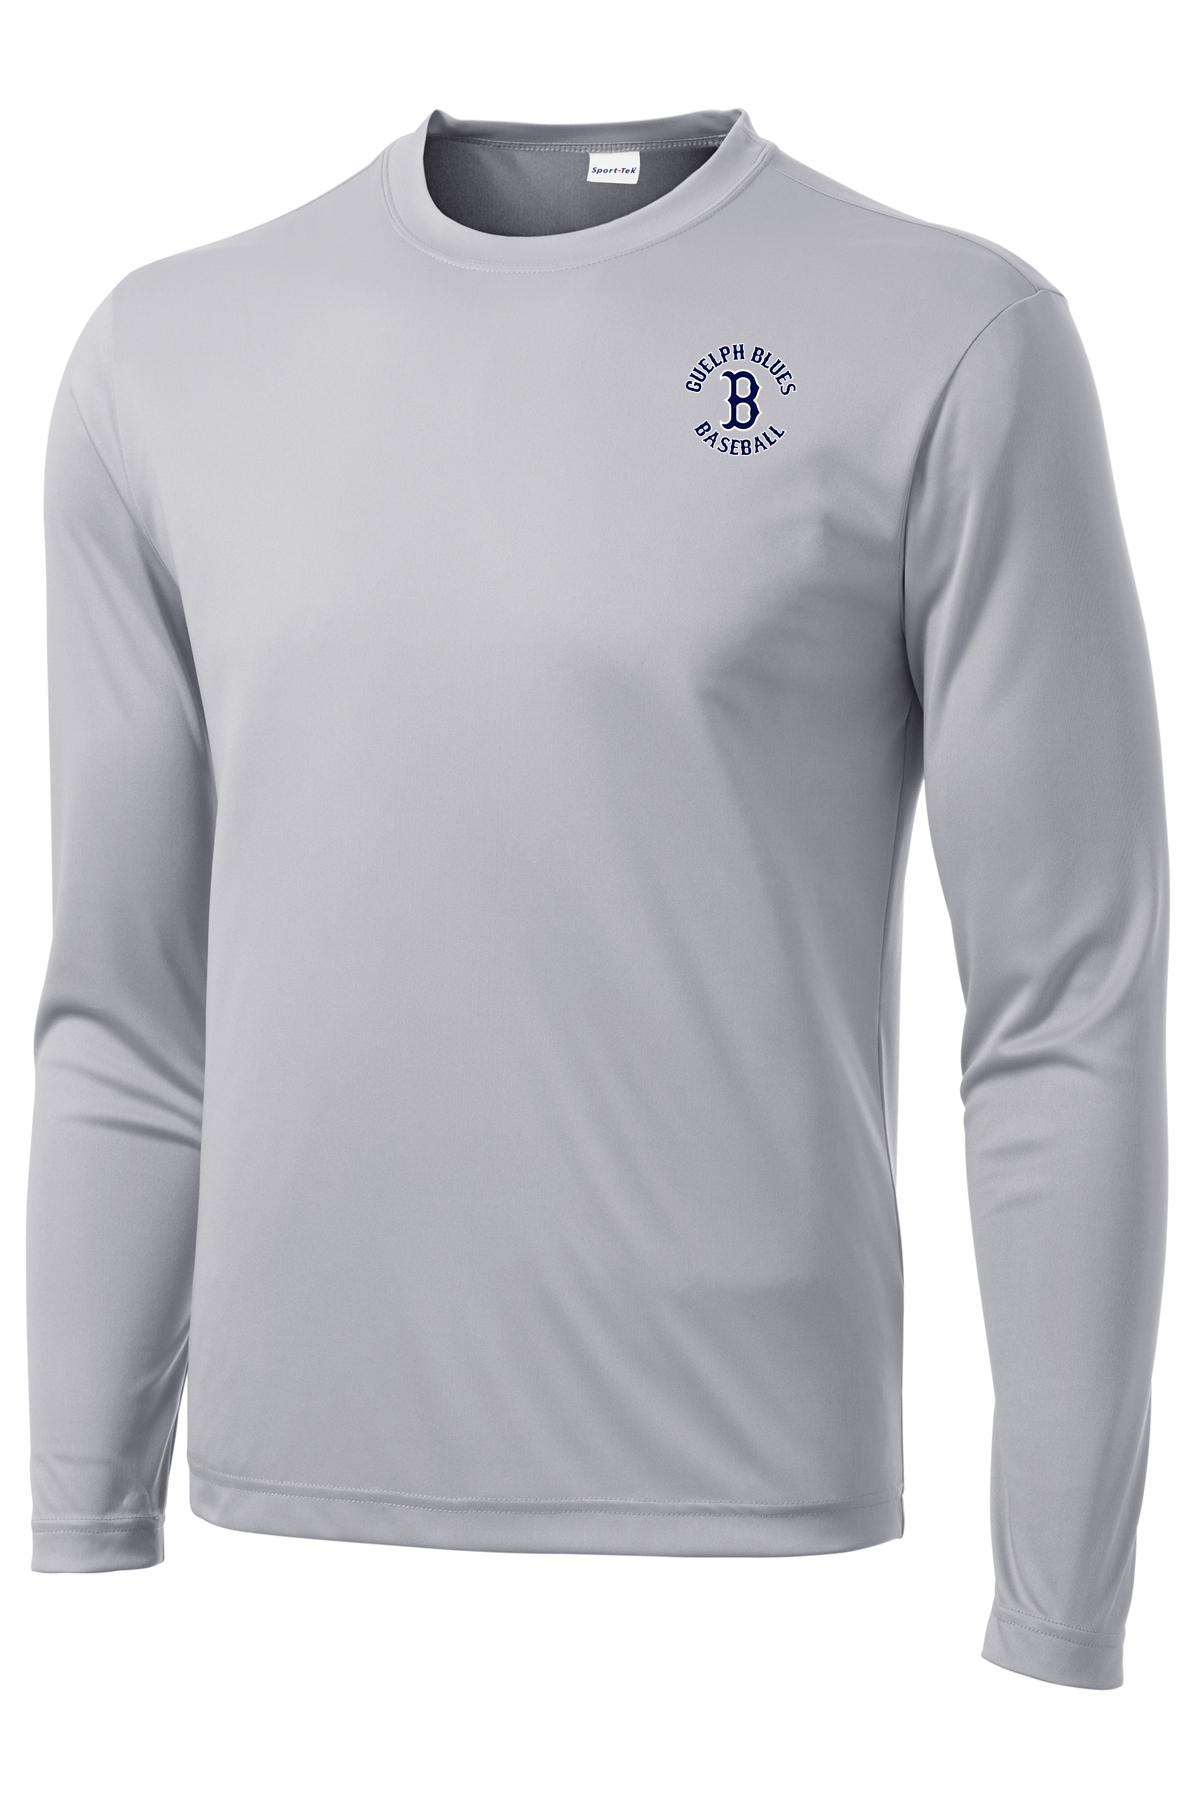 Guelph Blues Baseball Long Sleeve Performance Shirt